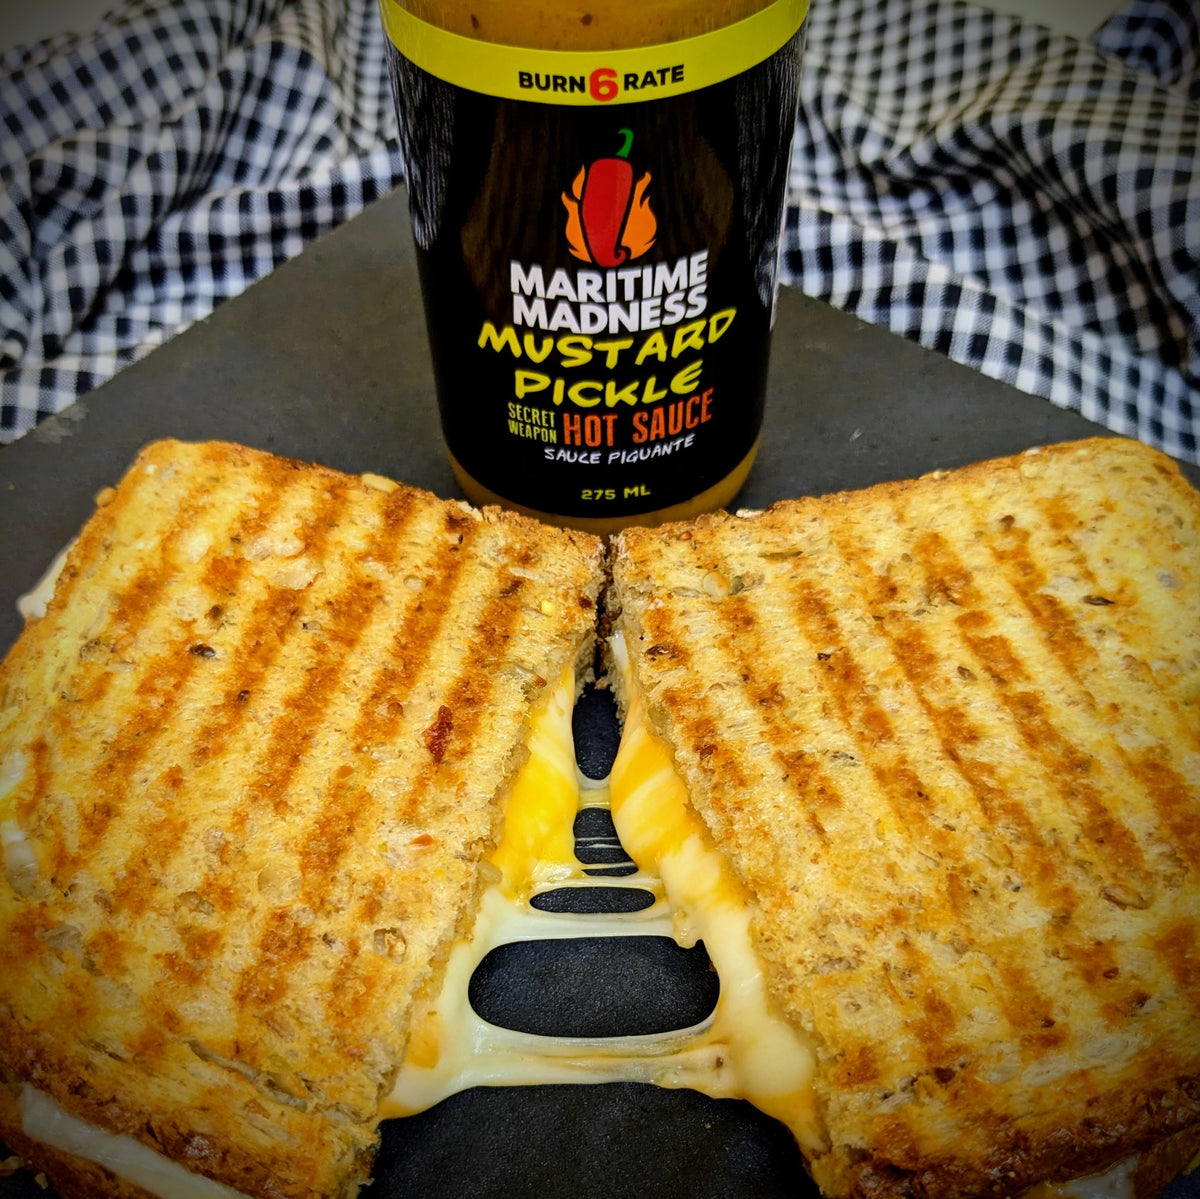 275ml Mustard Pickle Hot Sauce - Maritime Madness